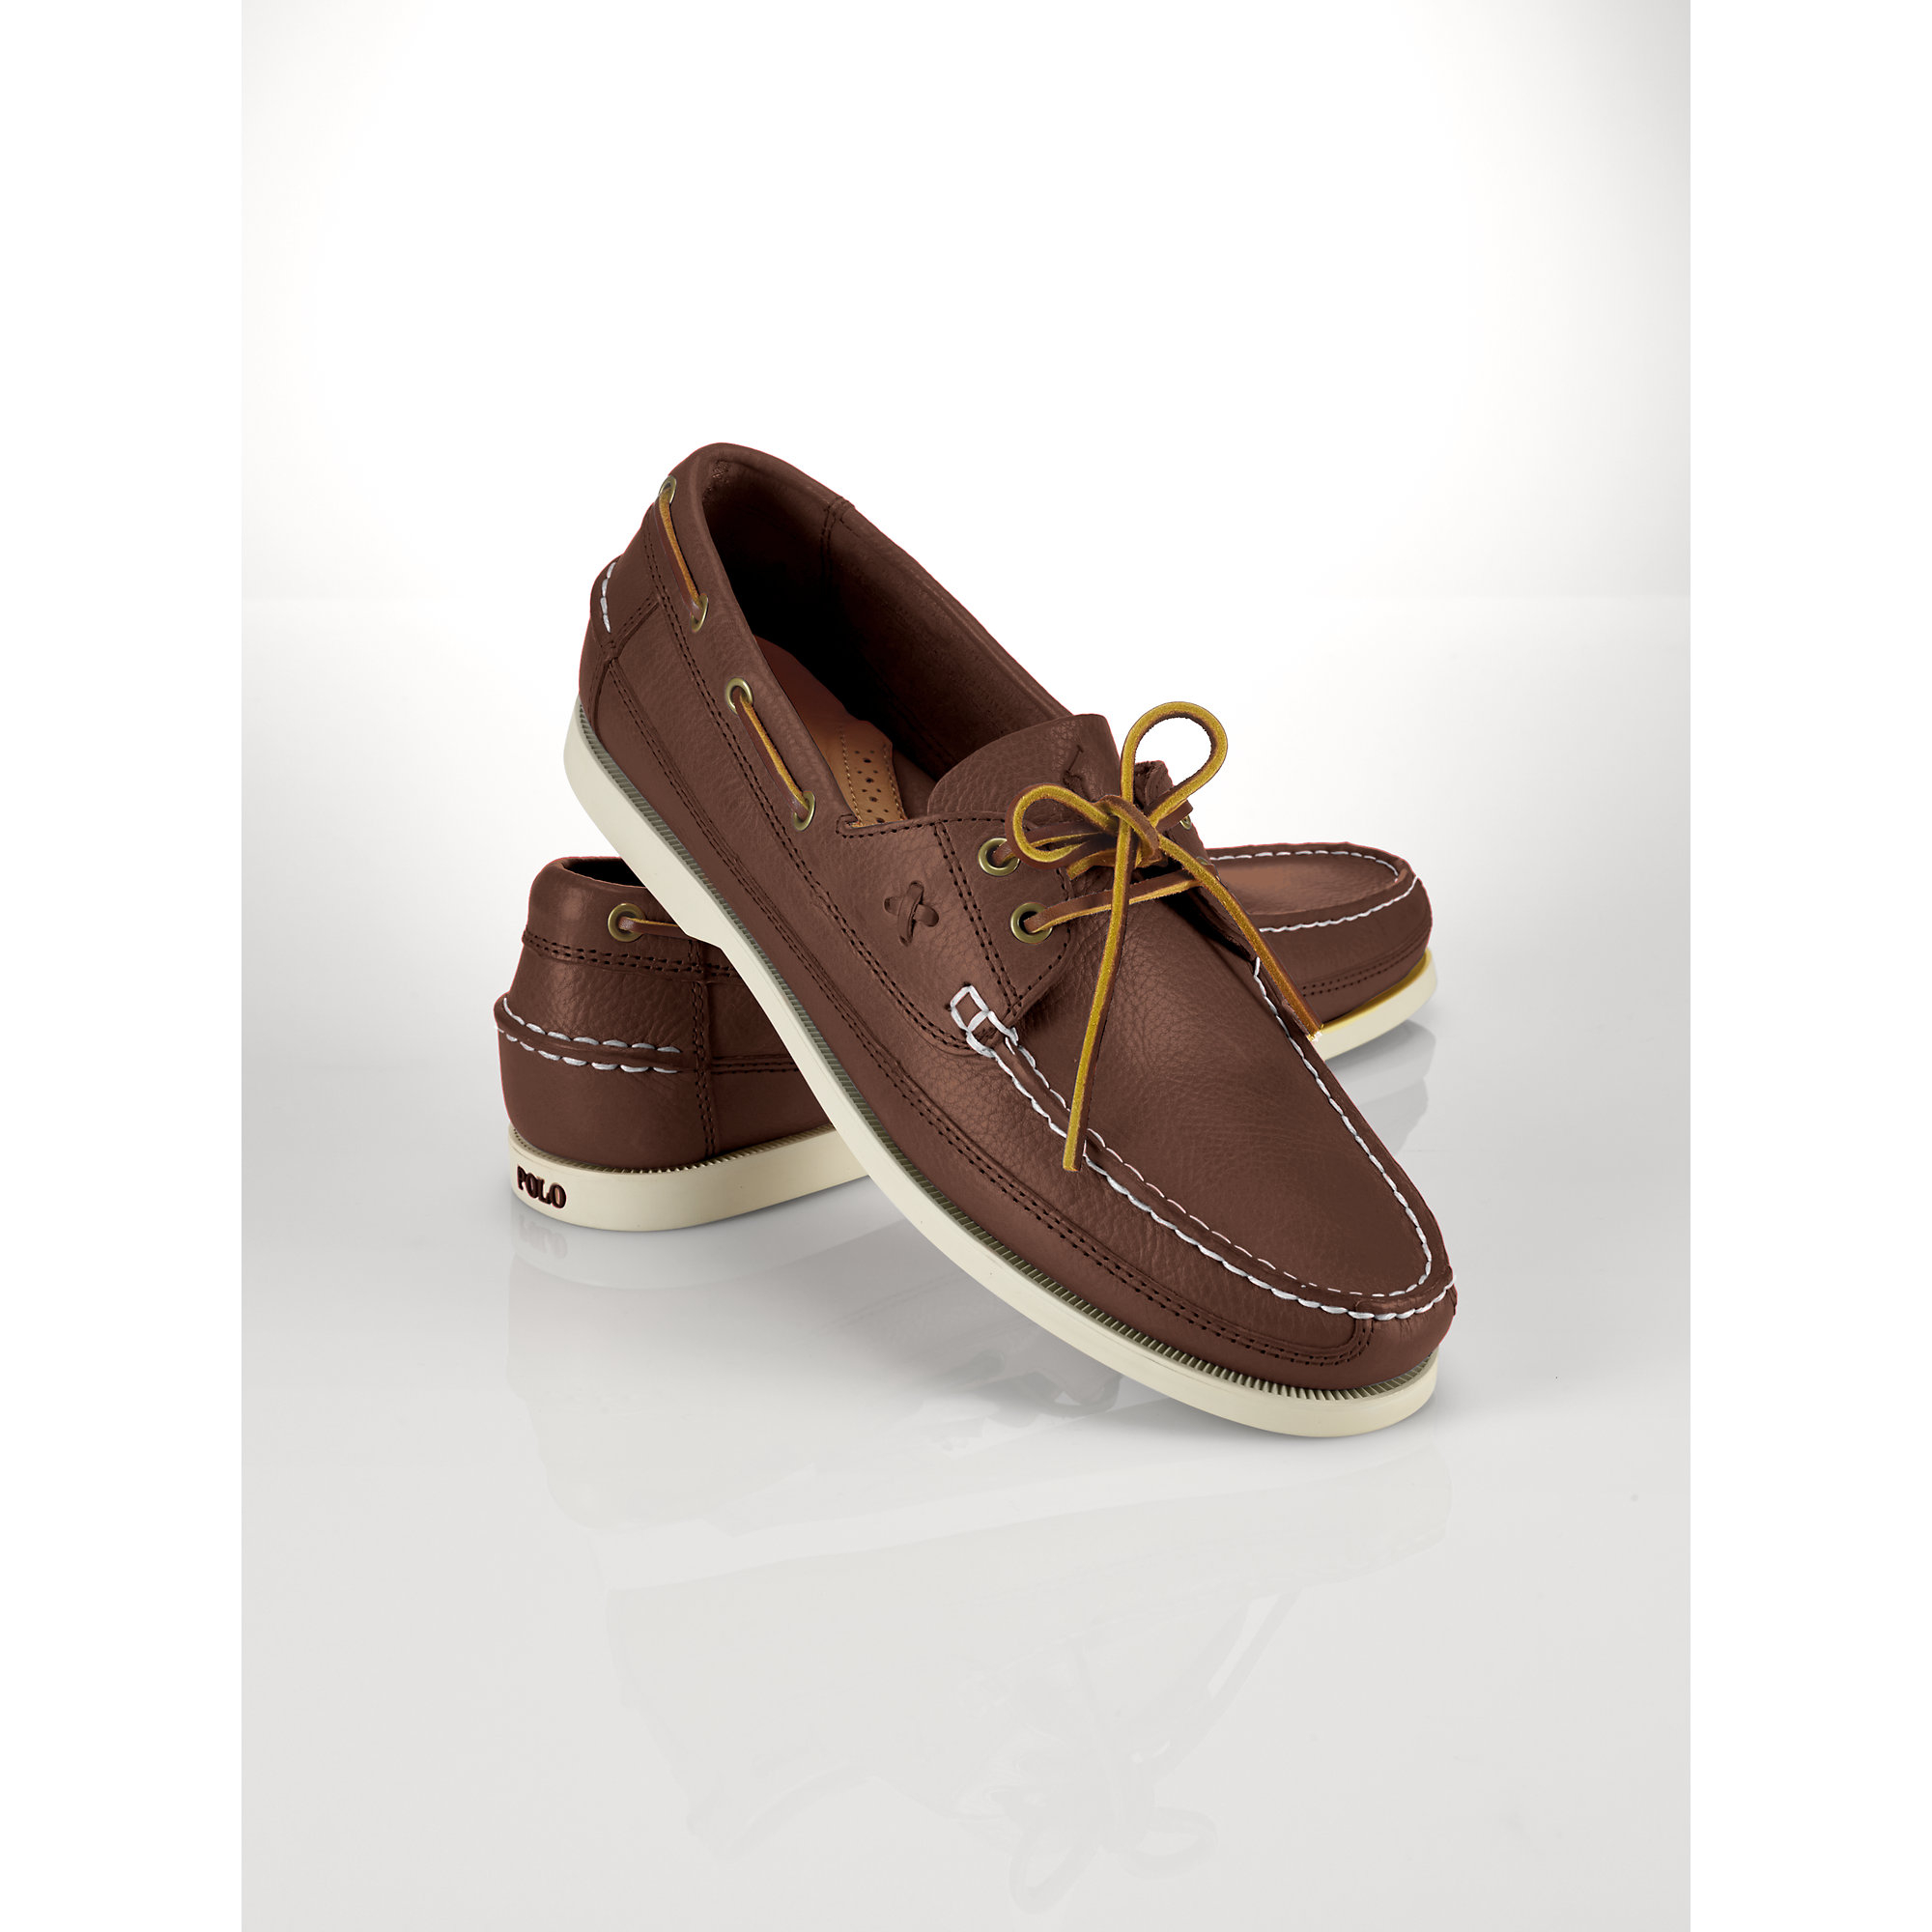 Polo Ralph Lauren merton leather boat shoes in navy | ASOS